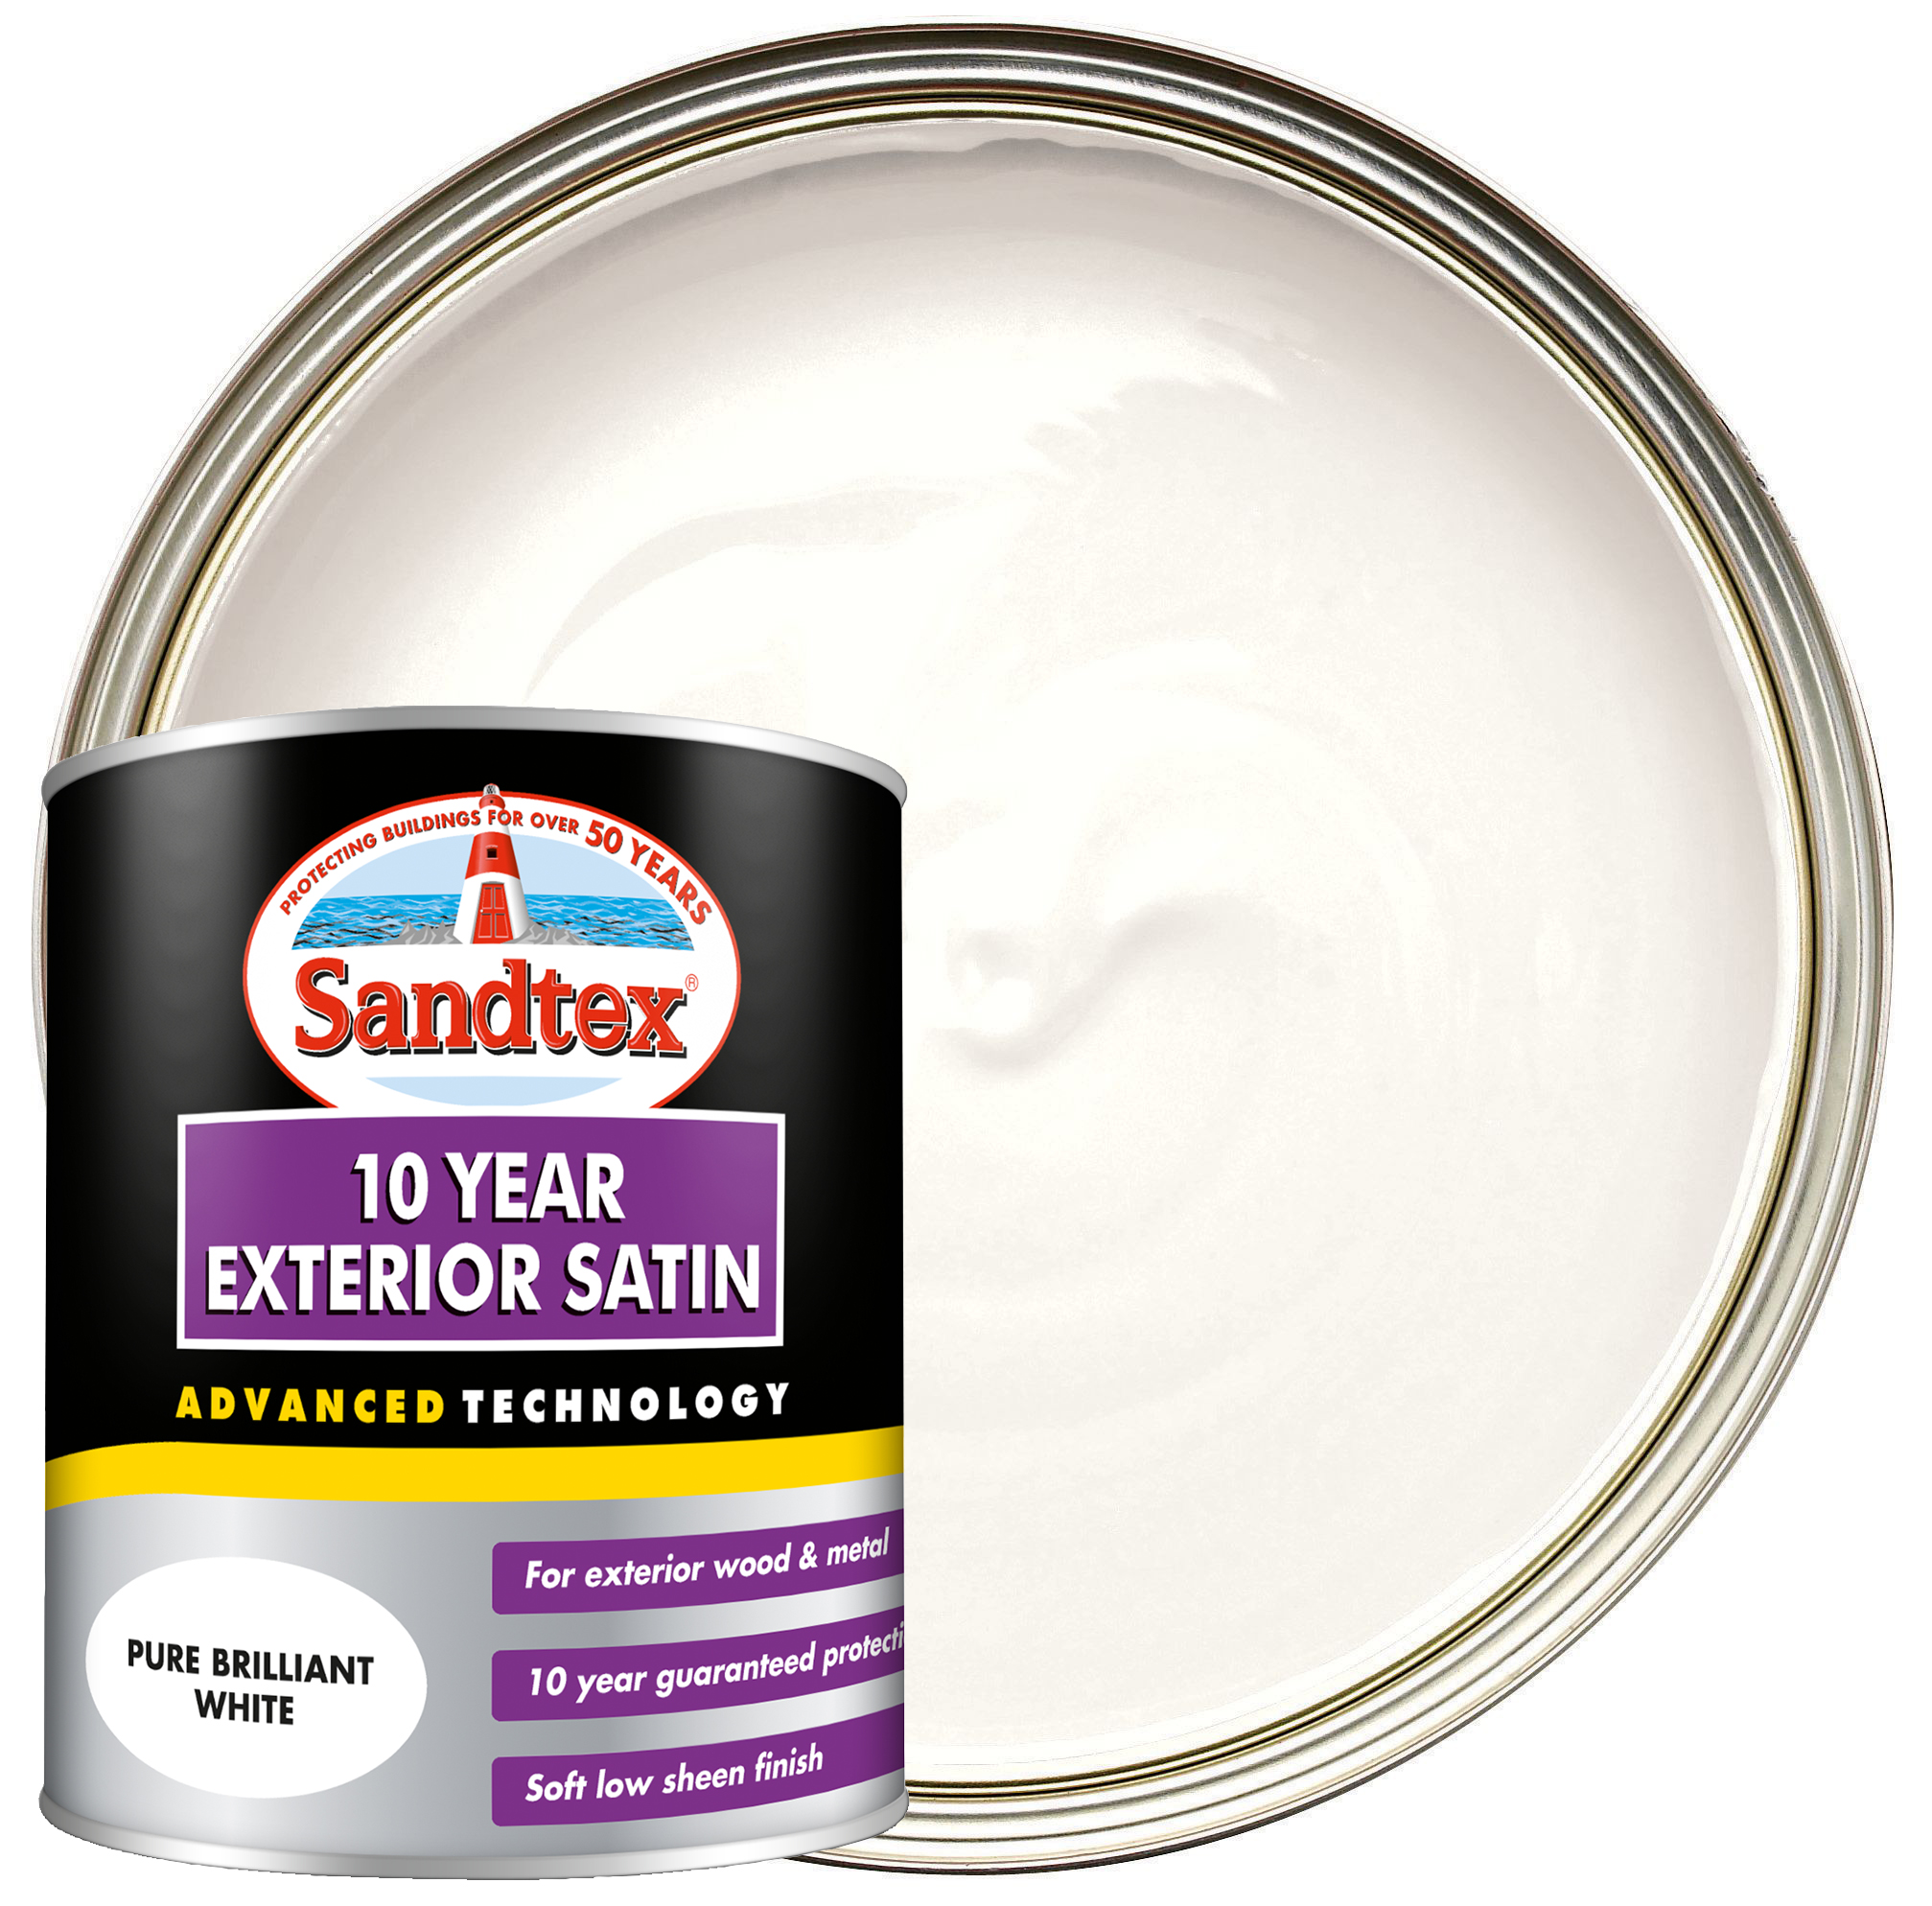 Image of Sandtex 10 Year Exterior Satin Paint - Pure Brilliant White - 750ml